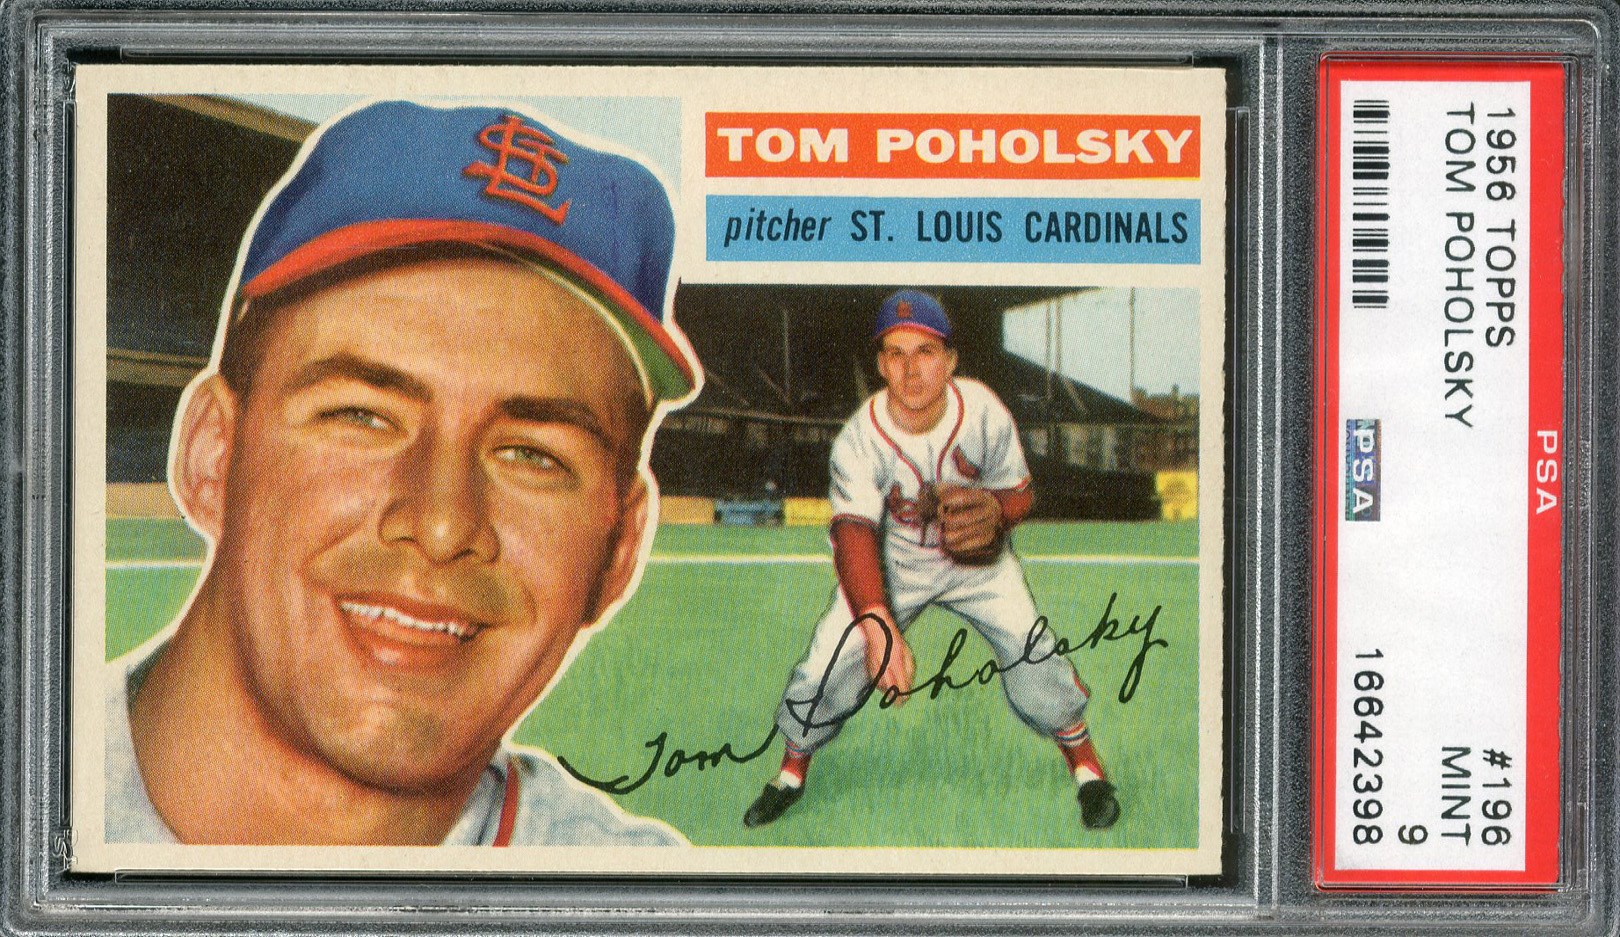 Baseball and Trading Cards - 1956 Topps #196 Tom Poholsky PSA MINT 9